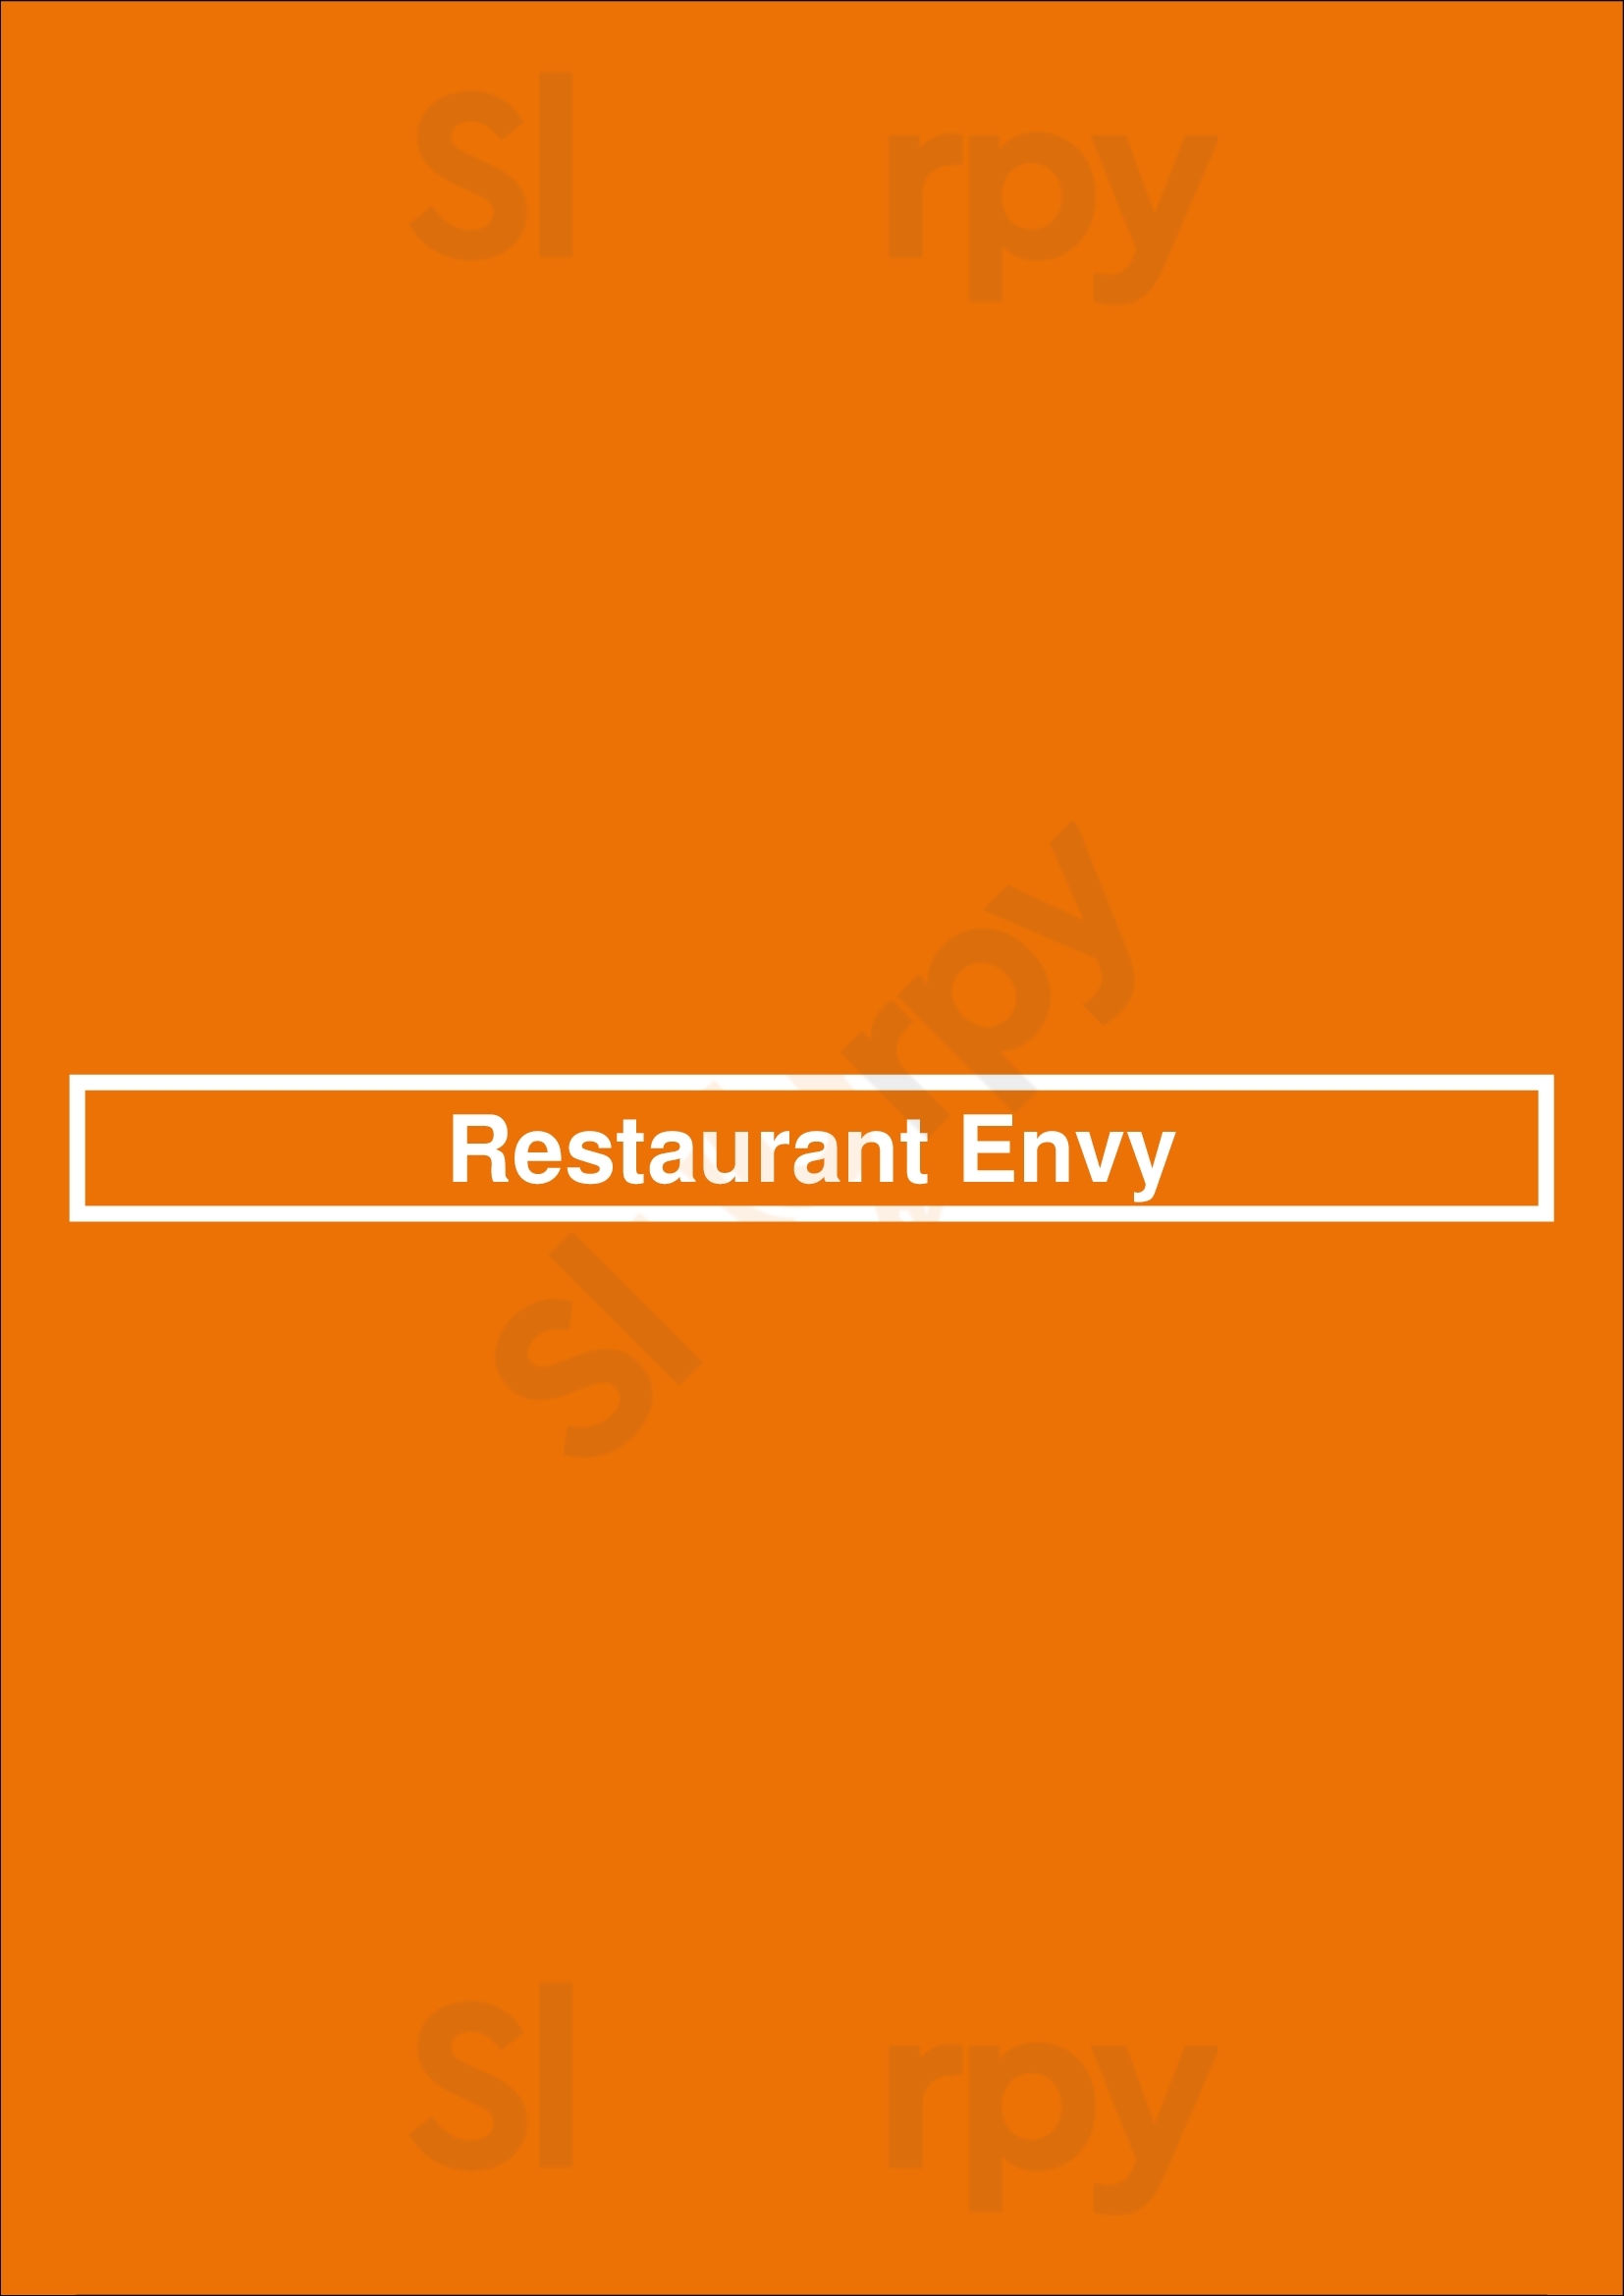 Restaurant Envy Amsterdam Menu - 1